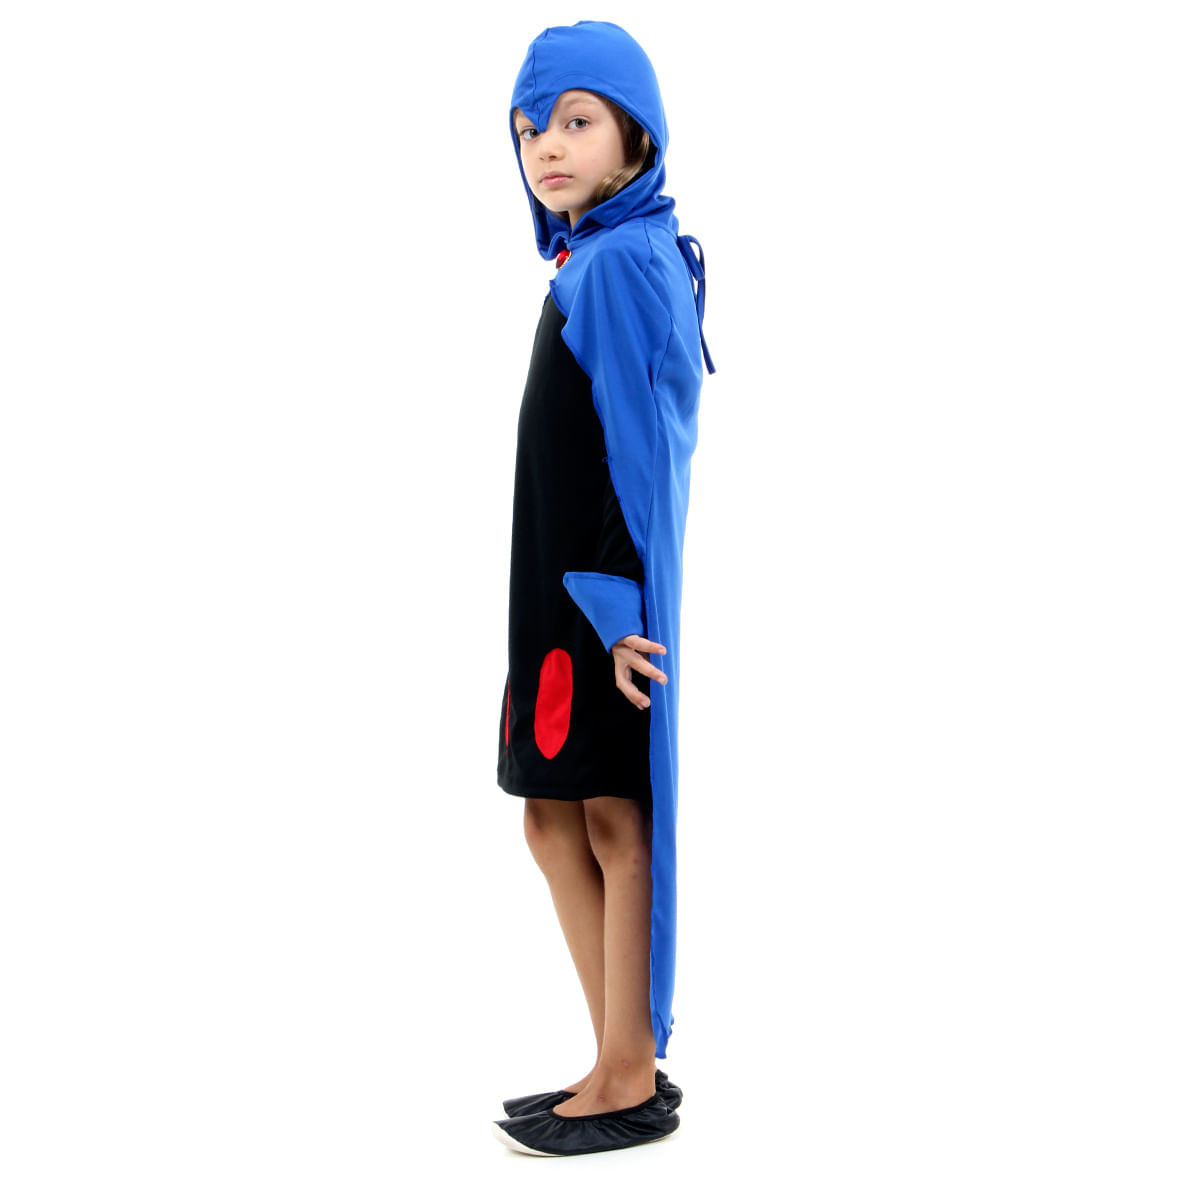 Fantasia Ravena Teen Titans Infantil 935480-P, Azul/Preto